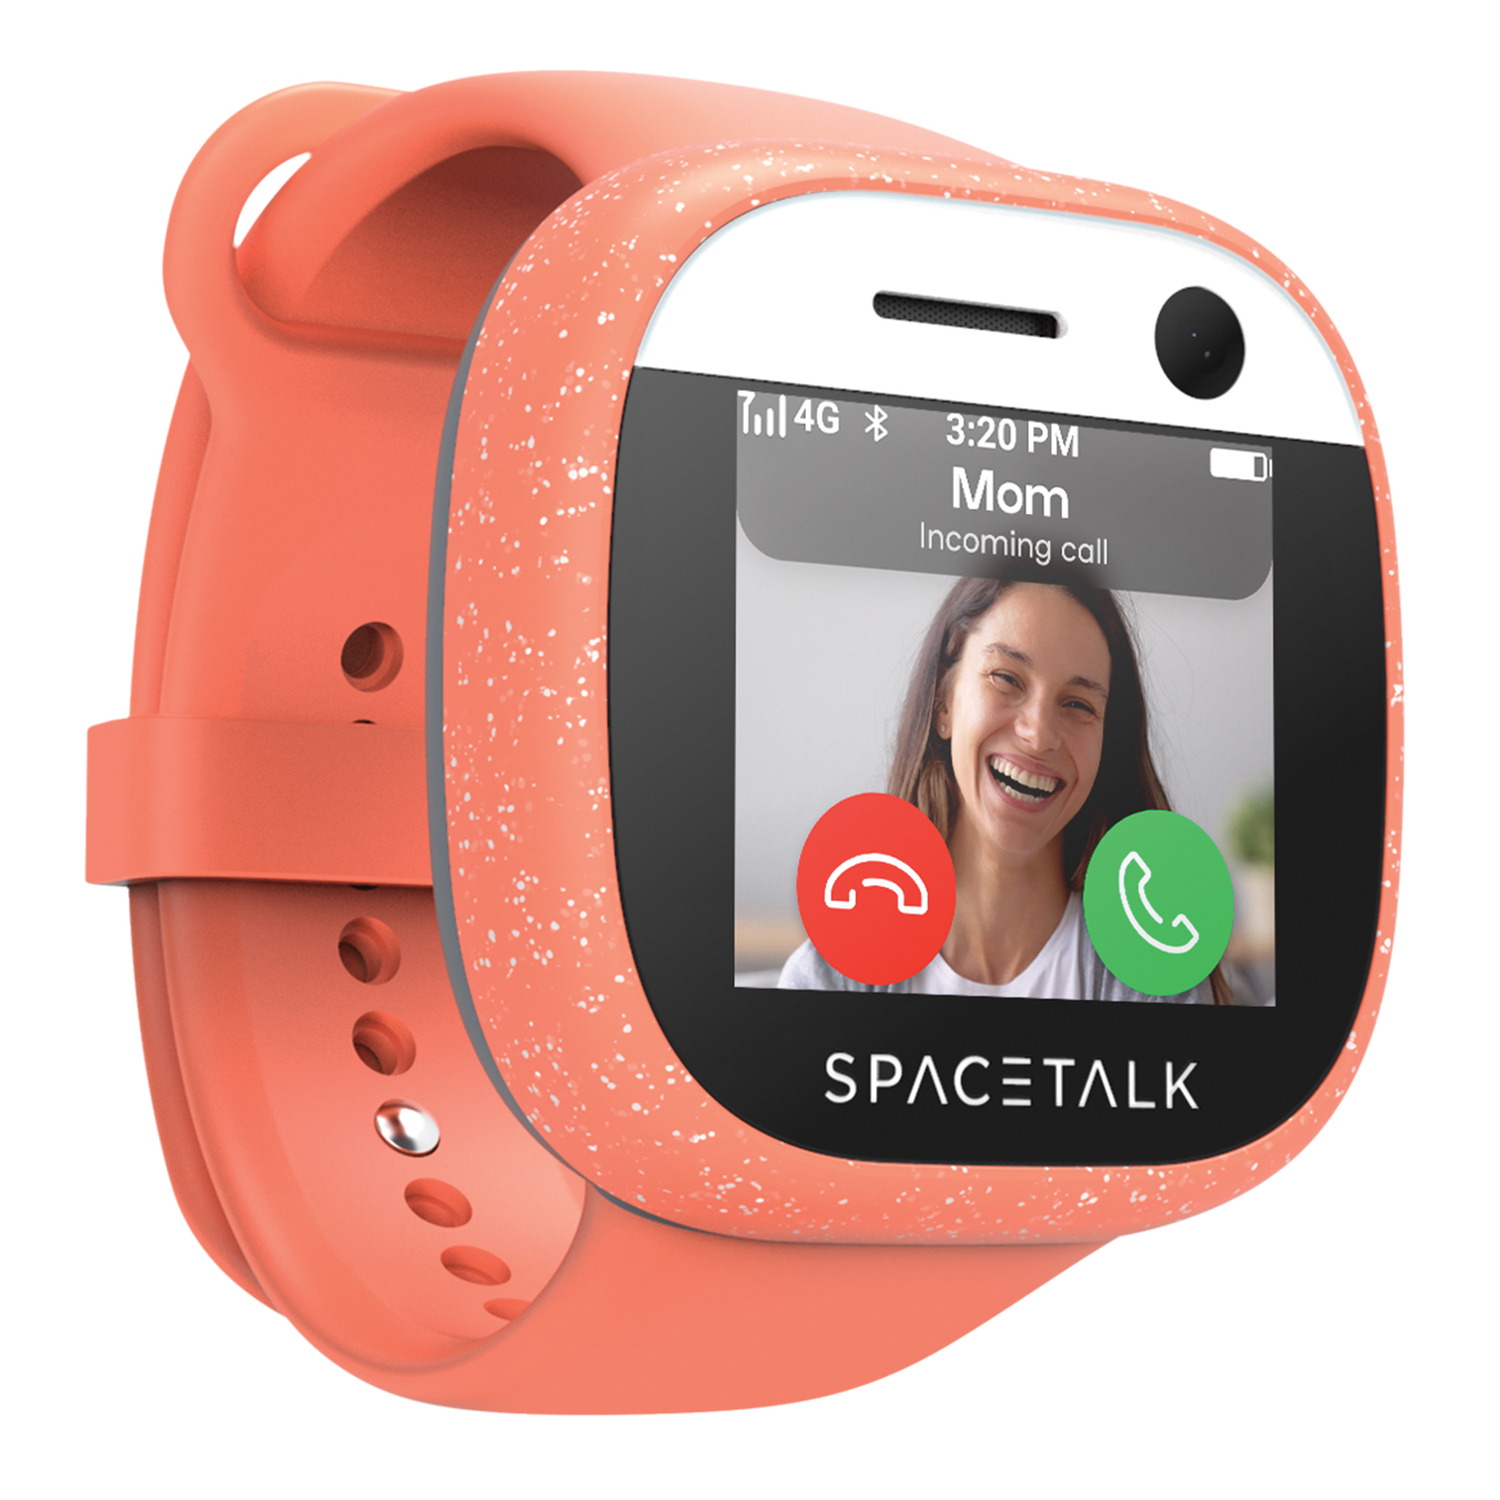 ''Spacetalk Adventurer 4G Kids Smart WATCH Phone and GPS Tracker, Calls, SOS, Text, Chat, 5 MP Camera